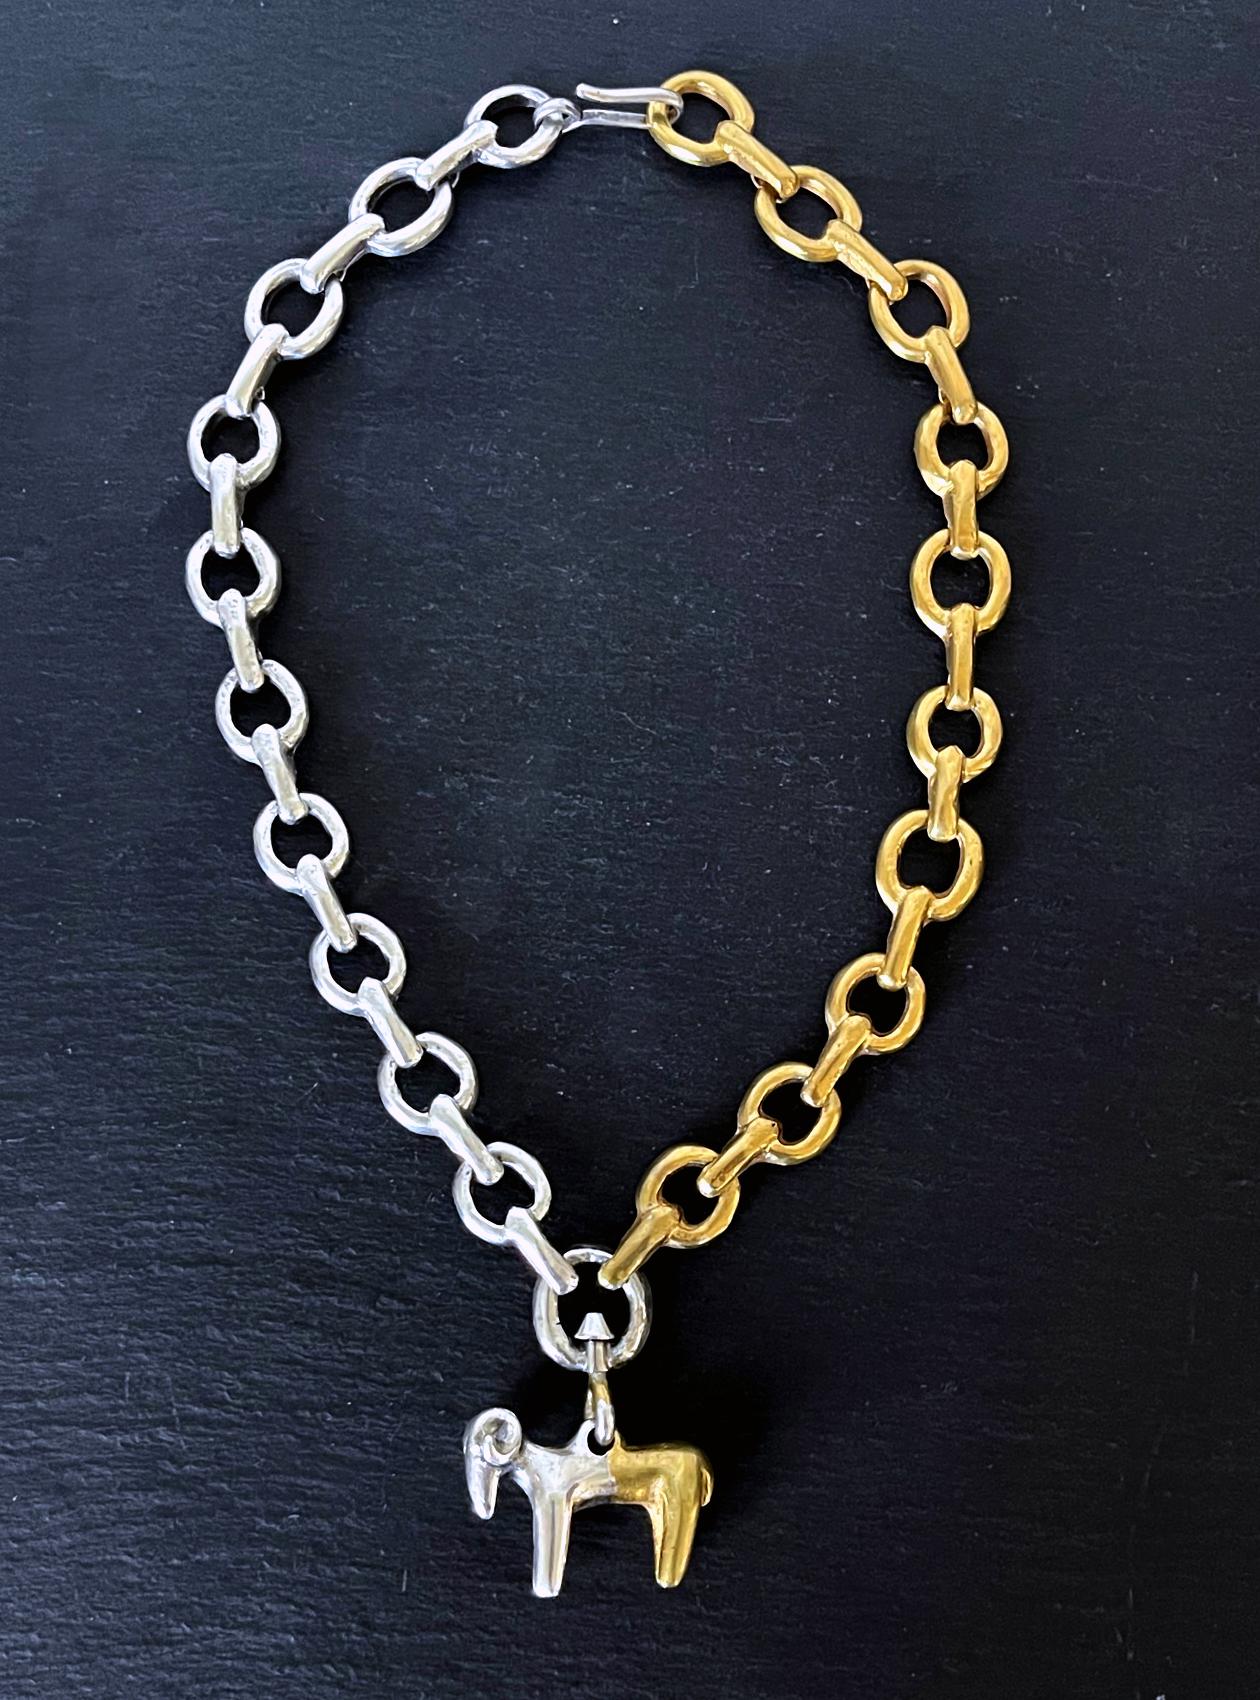 A cast bronze necklace titled 